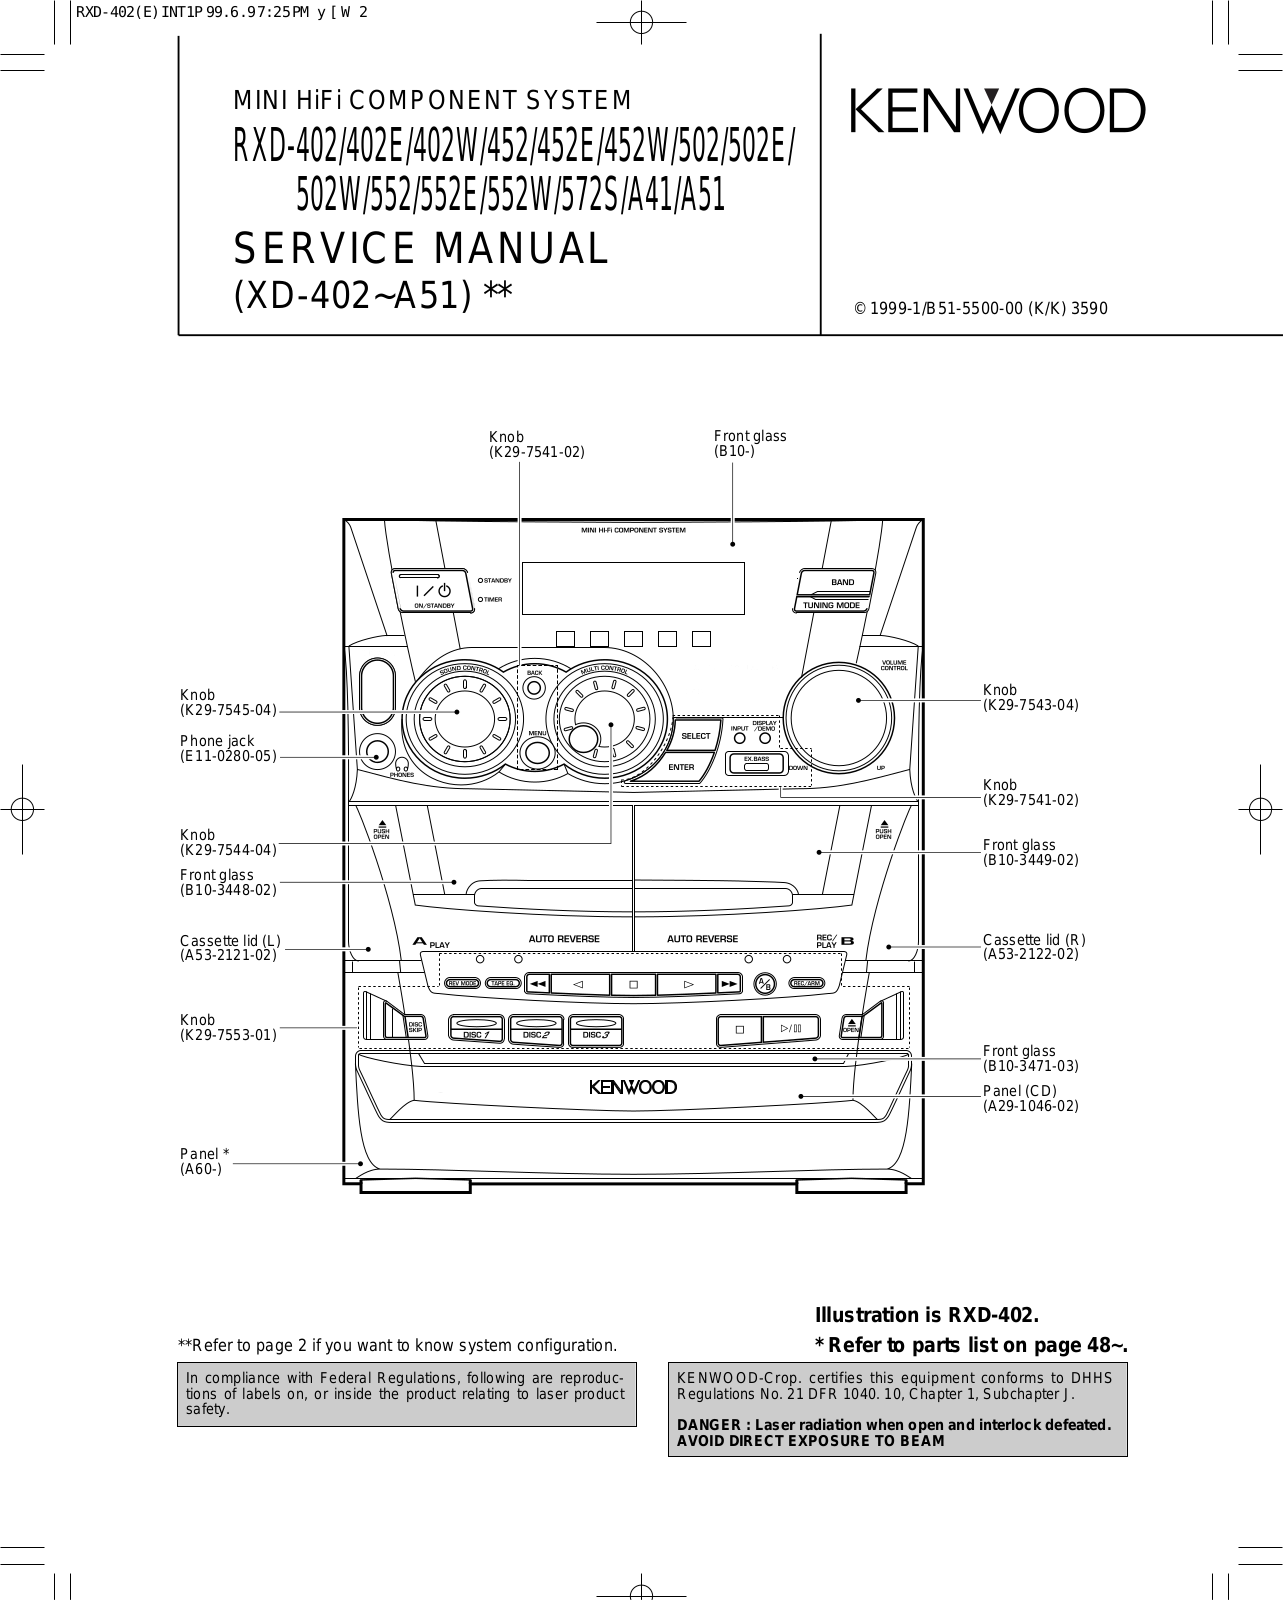 Kenwood RXD-402, RXD-402-E, RXD-402-W, RXD-452, RXD-452-E Service manual